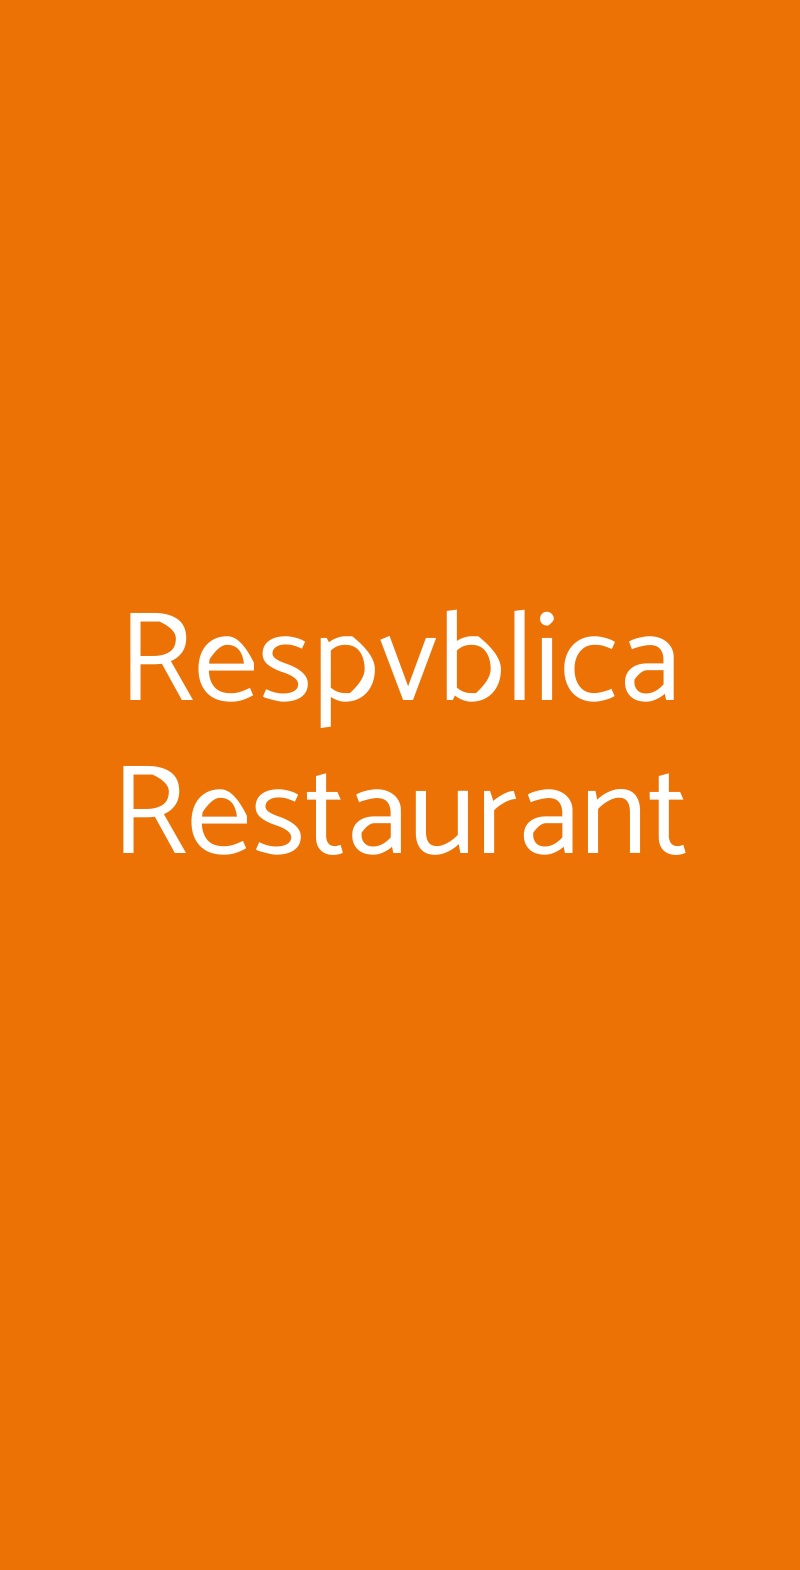 Respvblica Restaurant Pavie menù 1 pagina